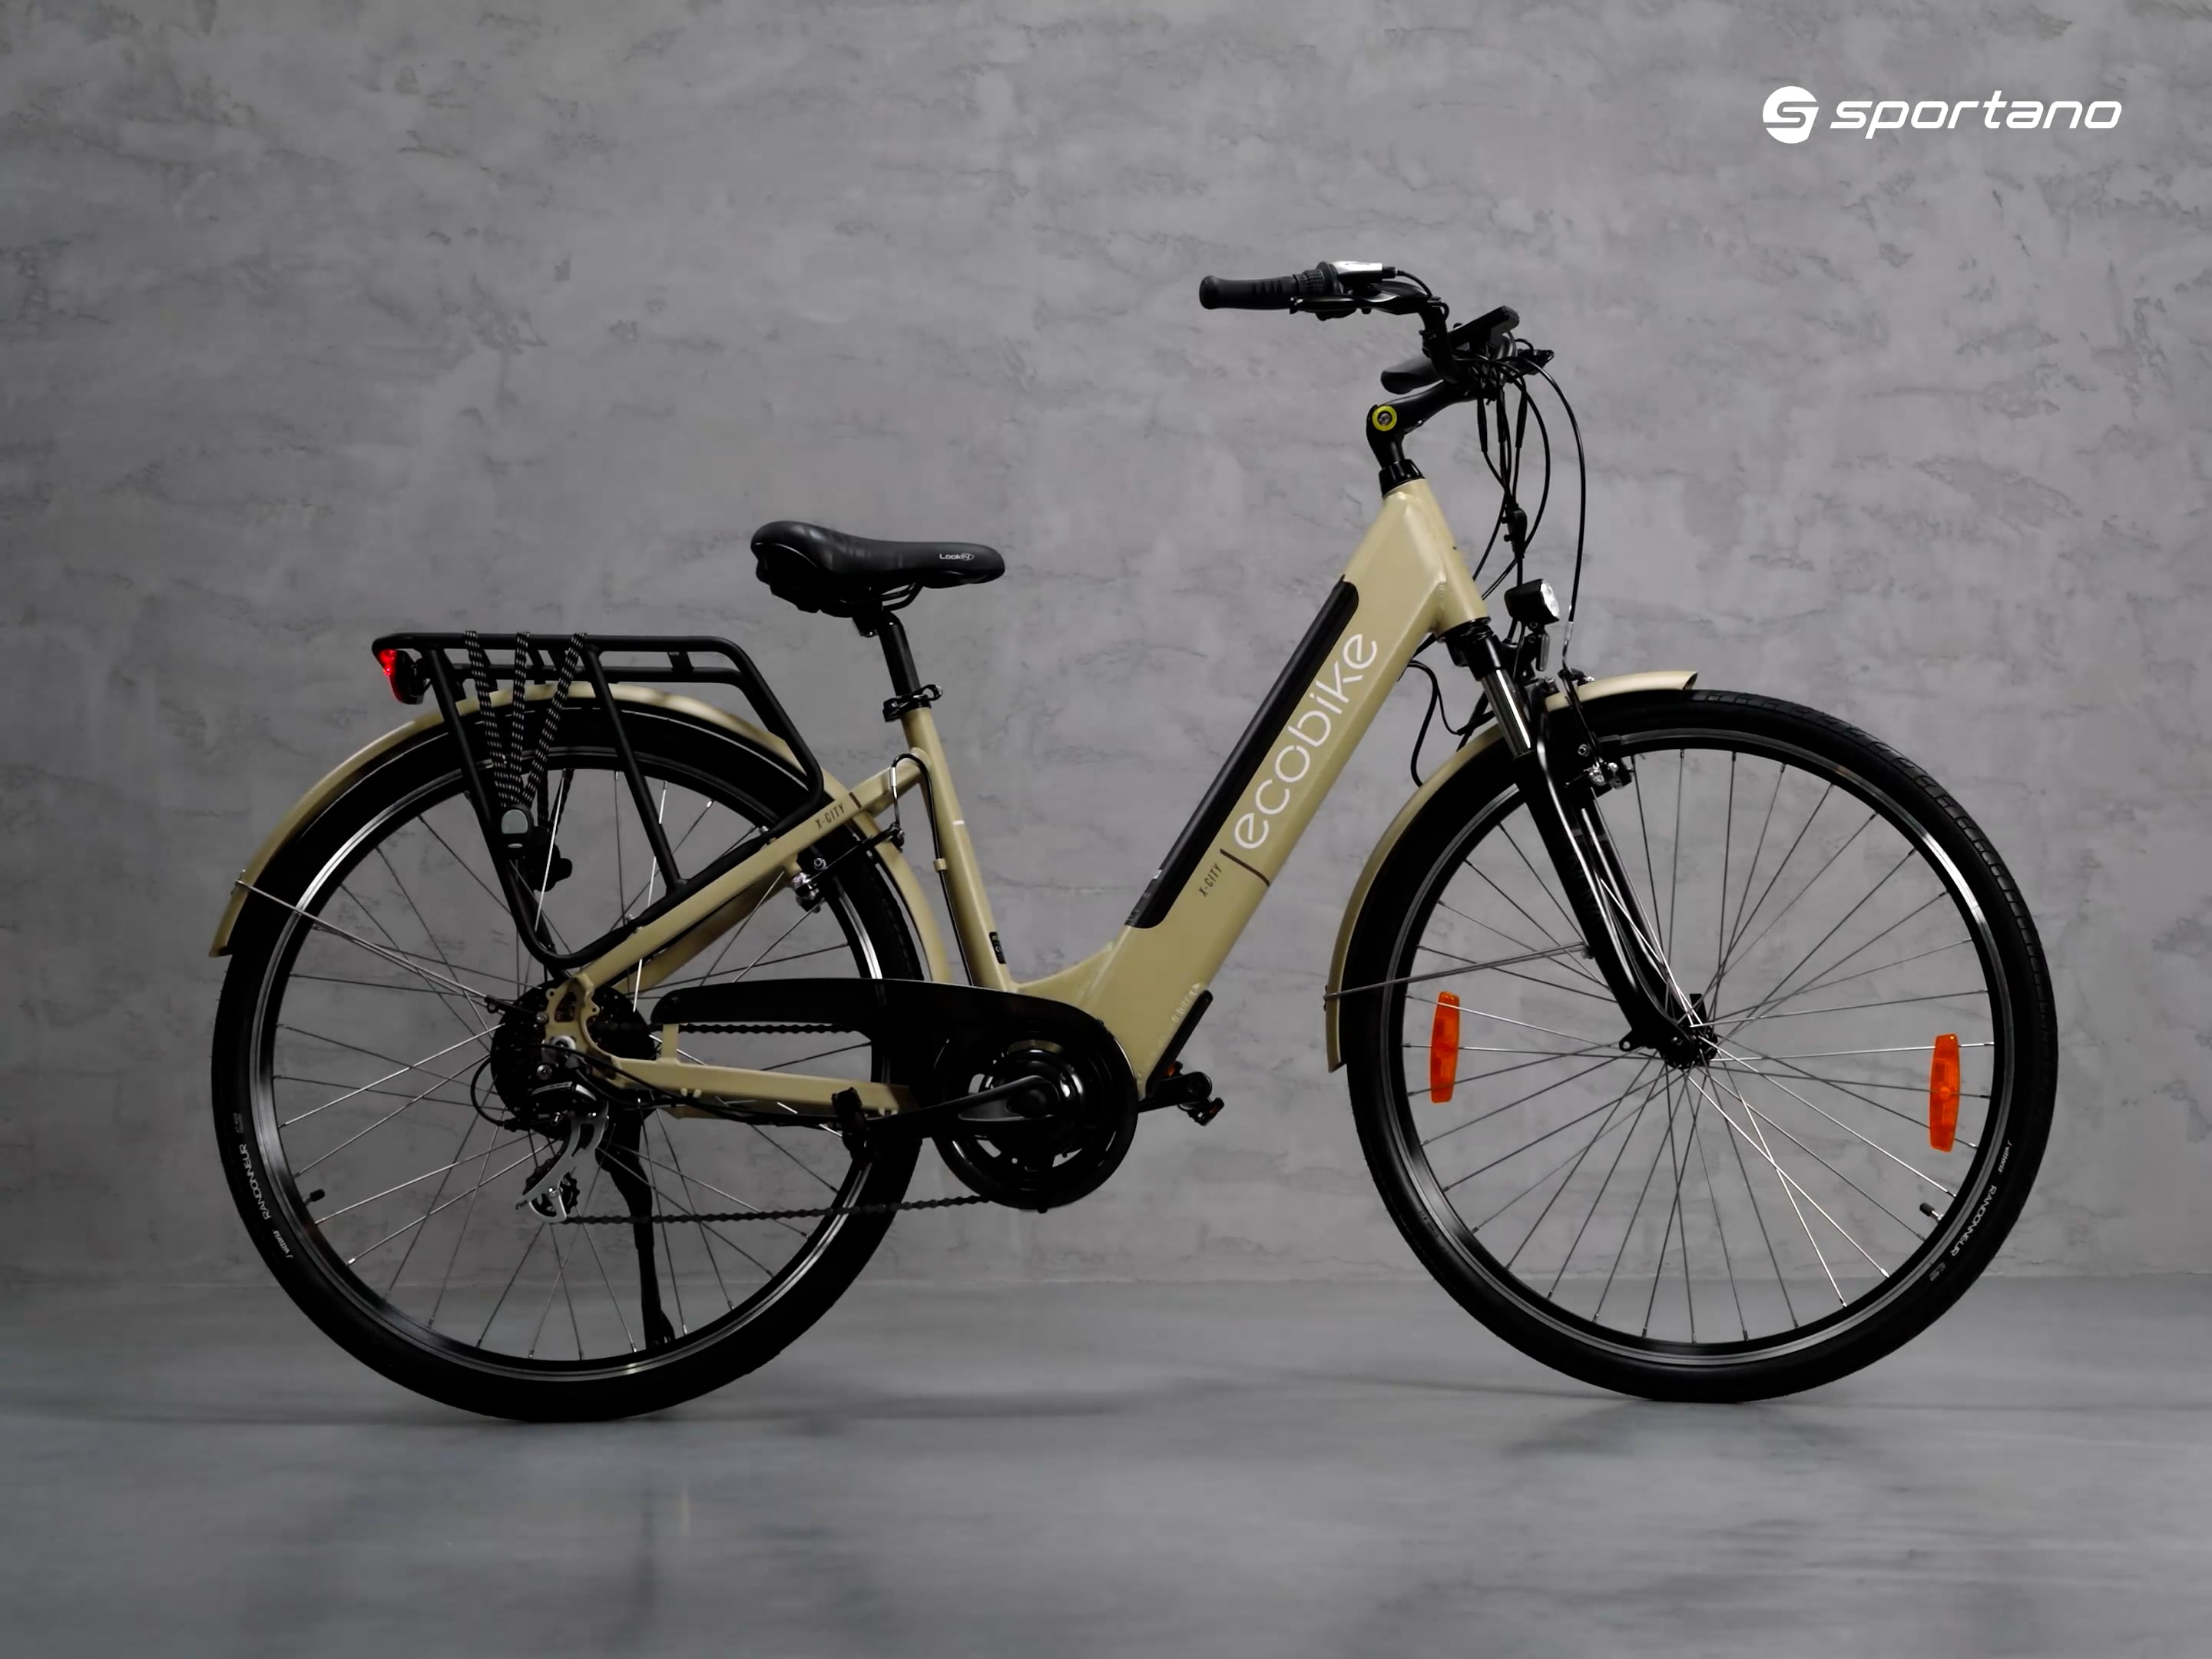 Ecobike X-City/X-CR LG elektrický bicykel 13Ah béžová 1010113